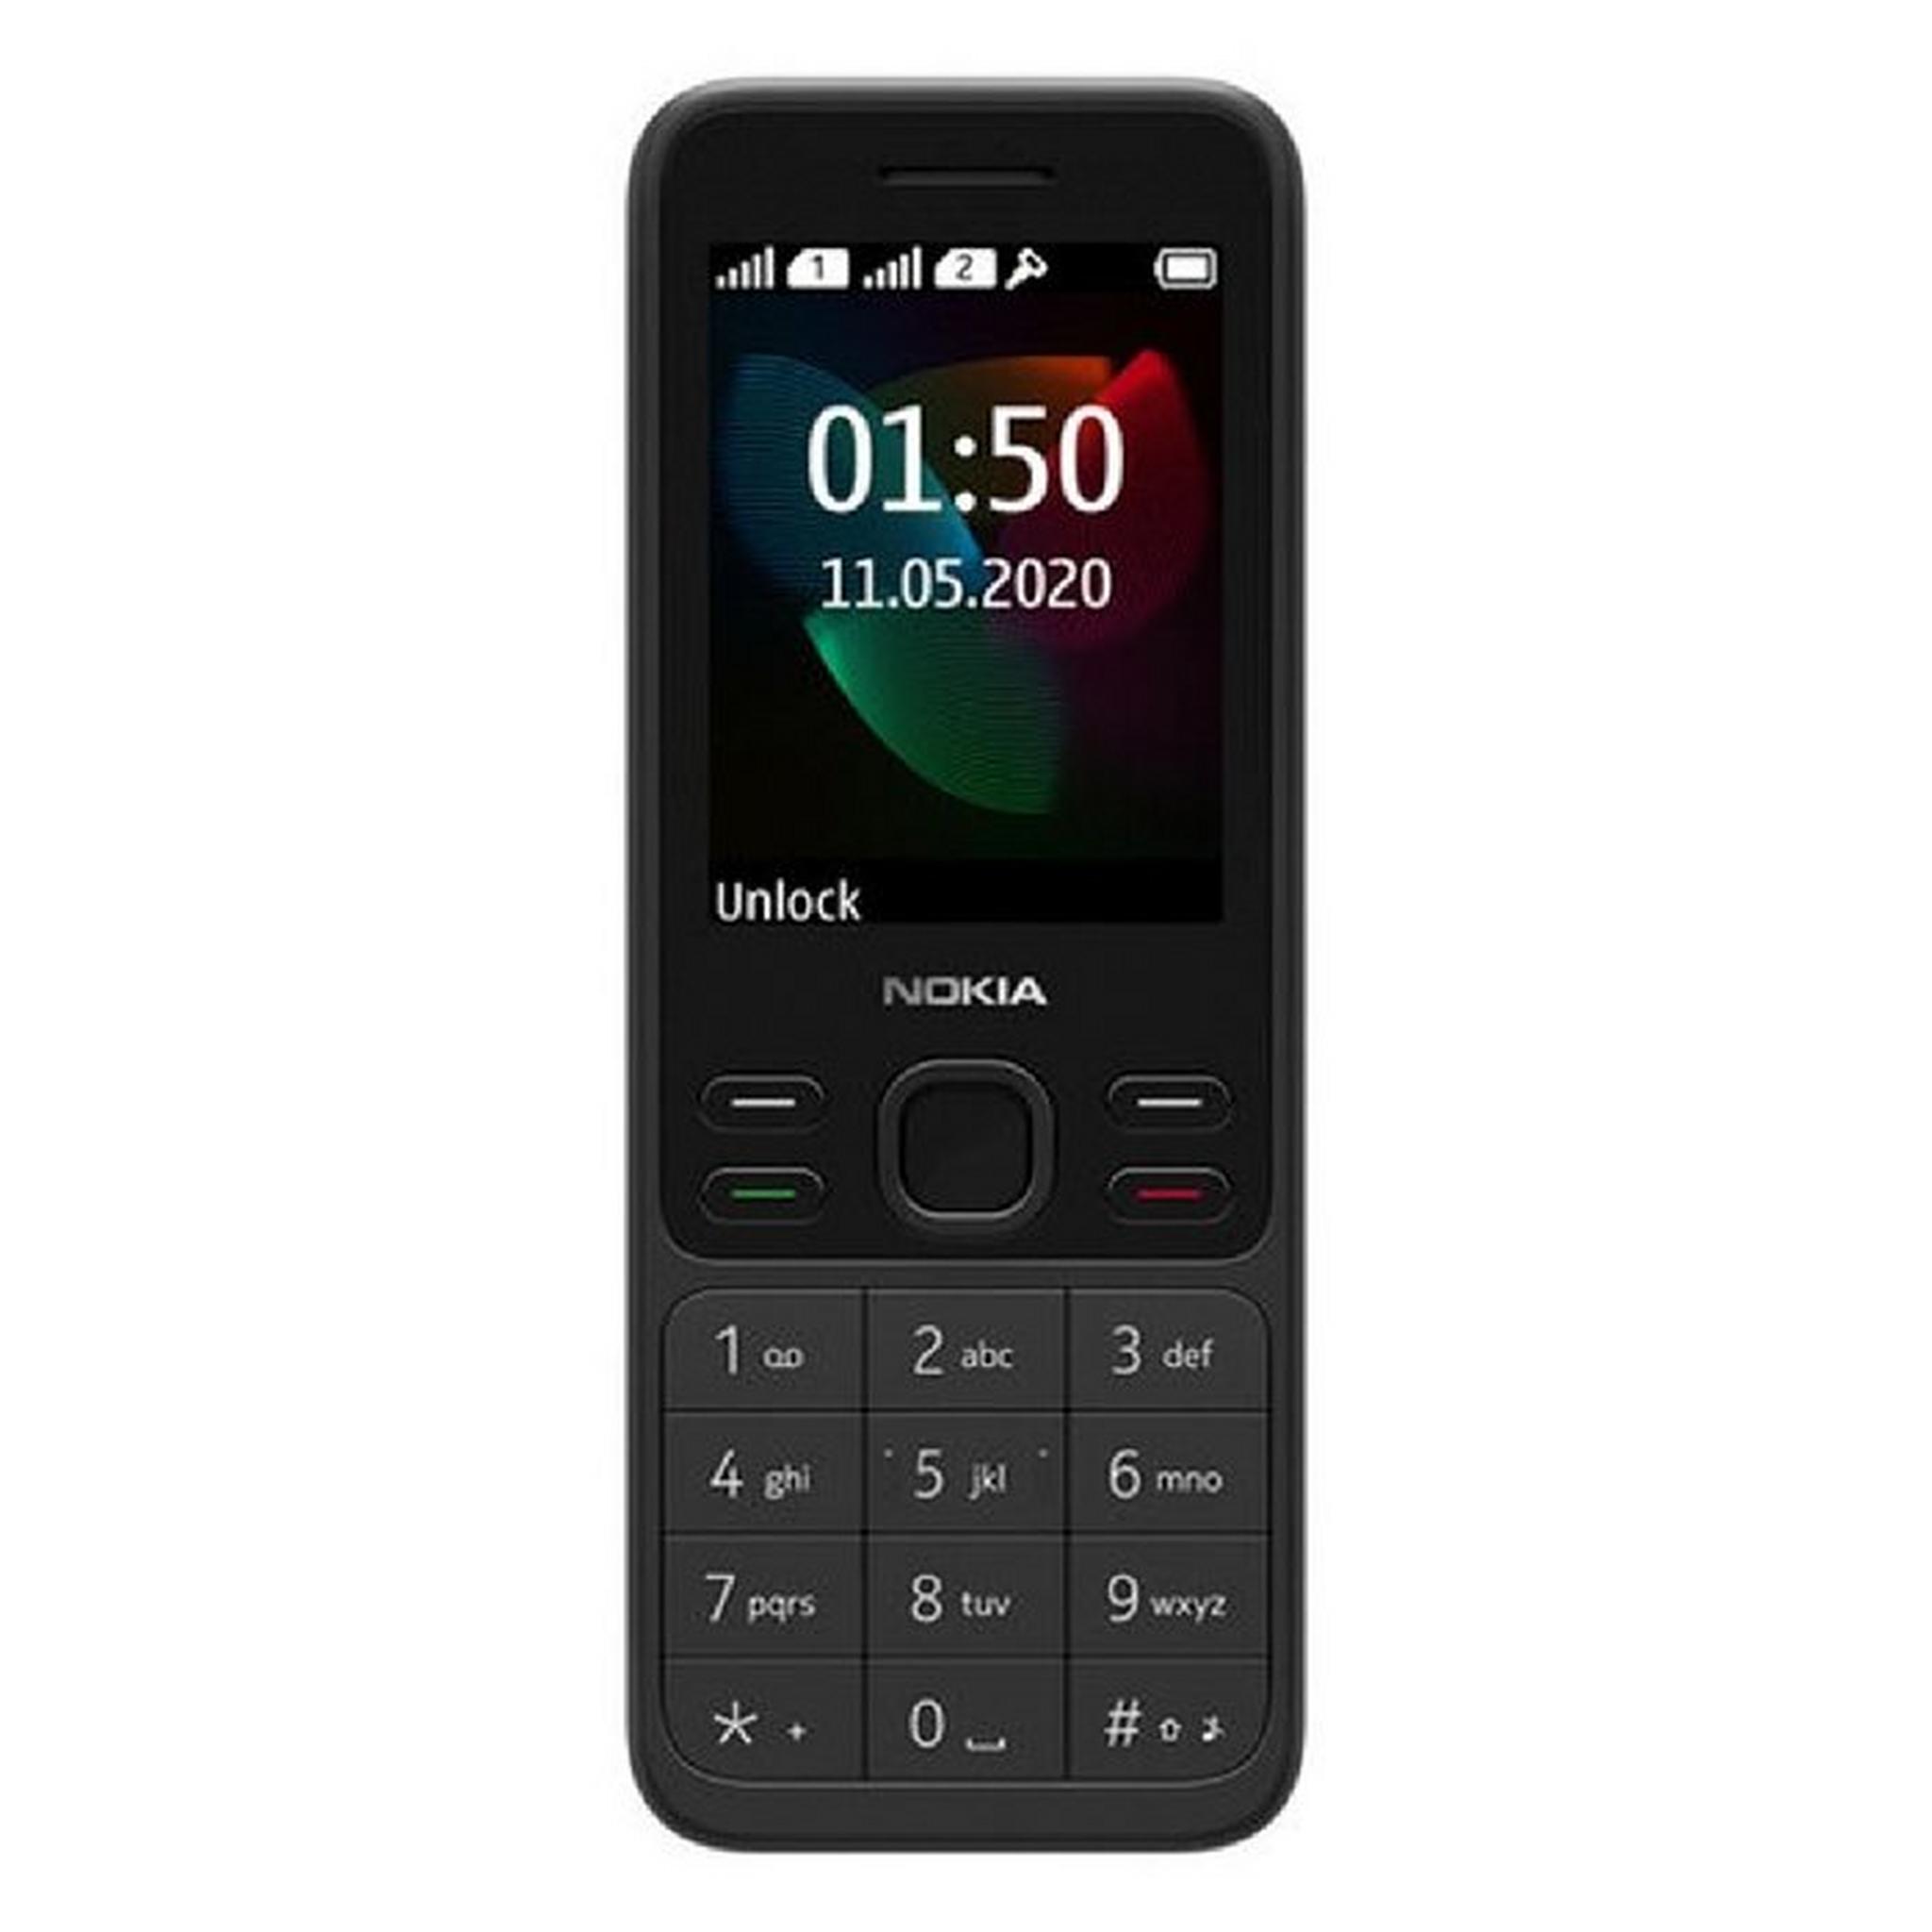 Nokia 150 TA-1253 4 MB Phone - Black